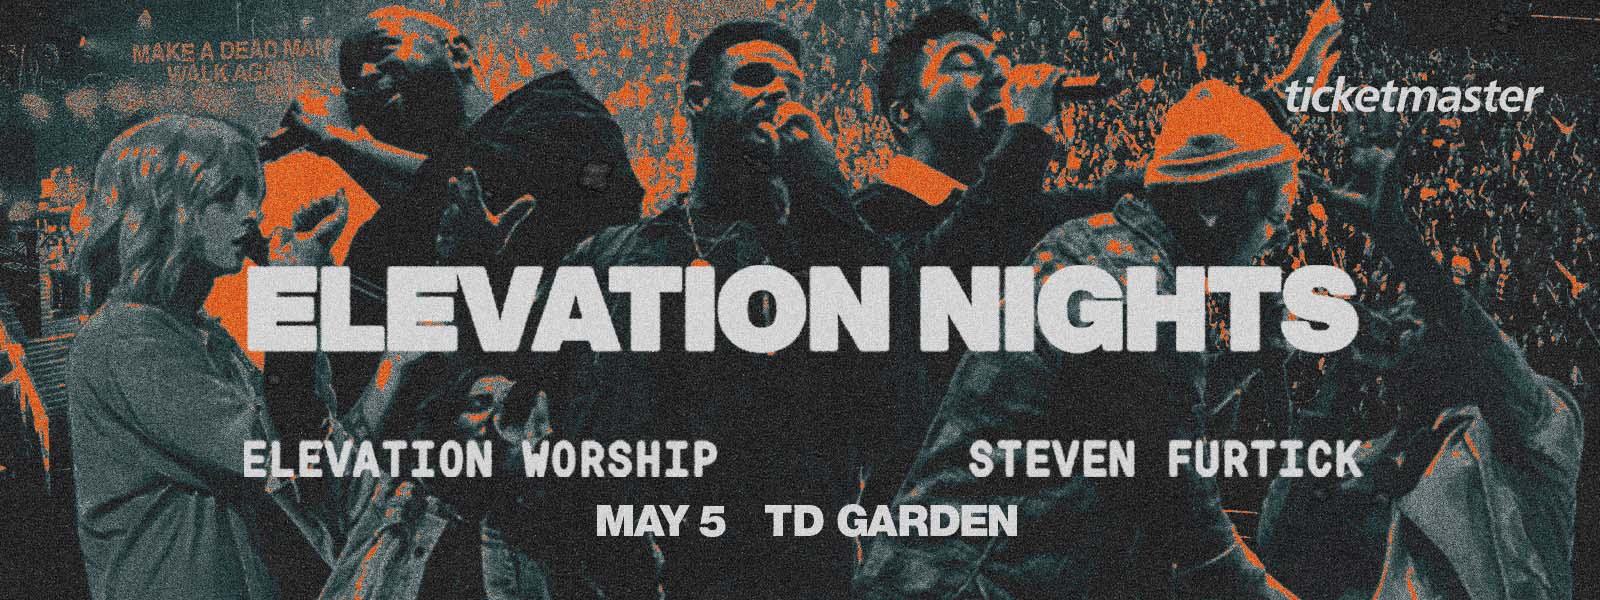 Elevation Nights: Elevation Worship and Steven Furtick